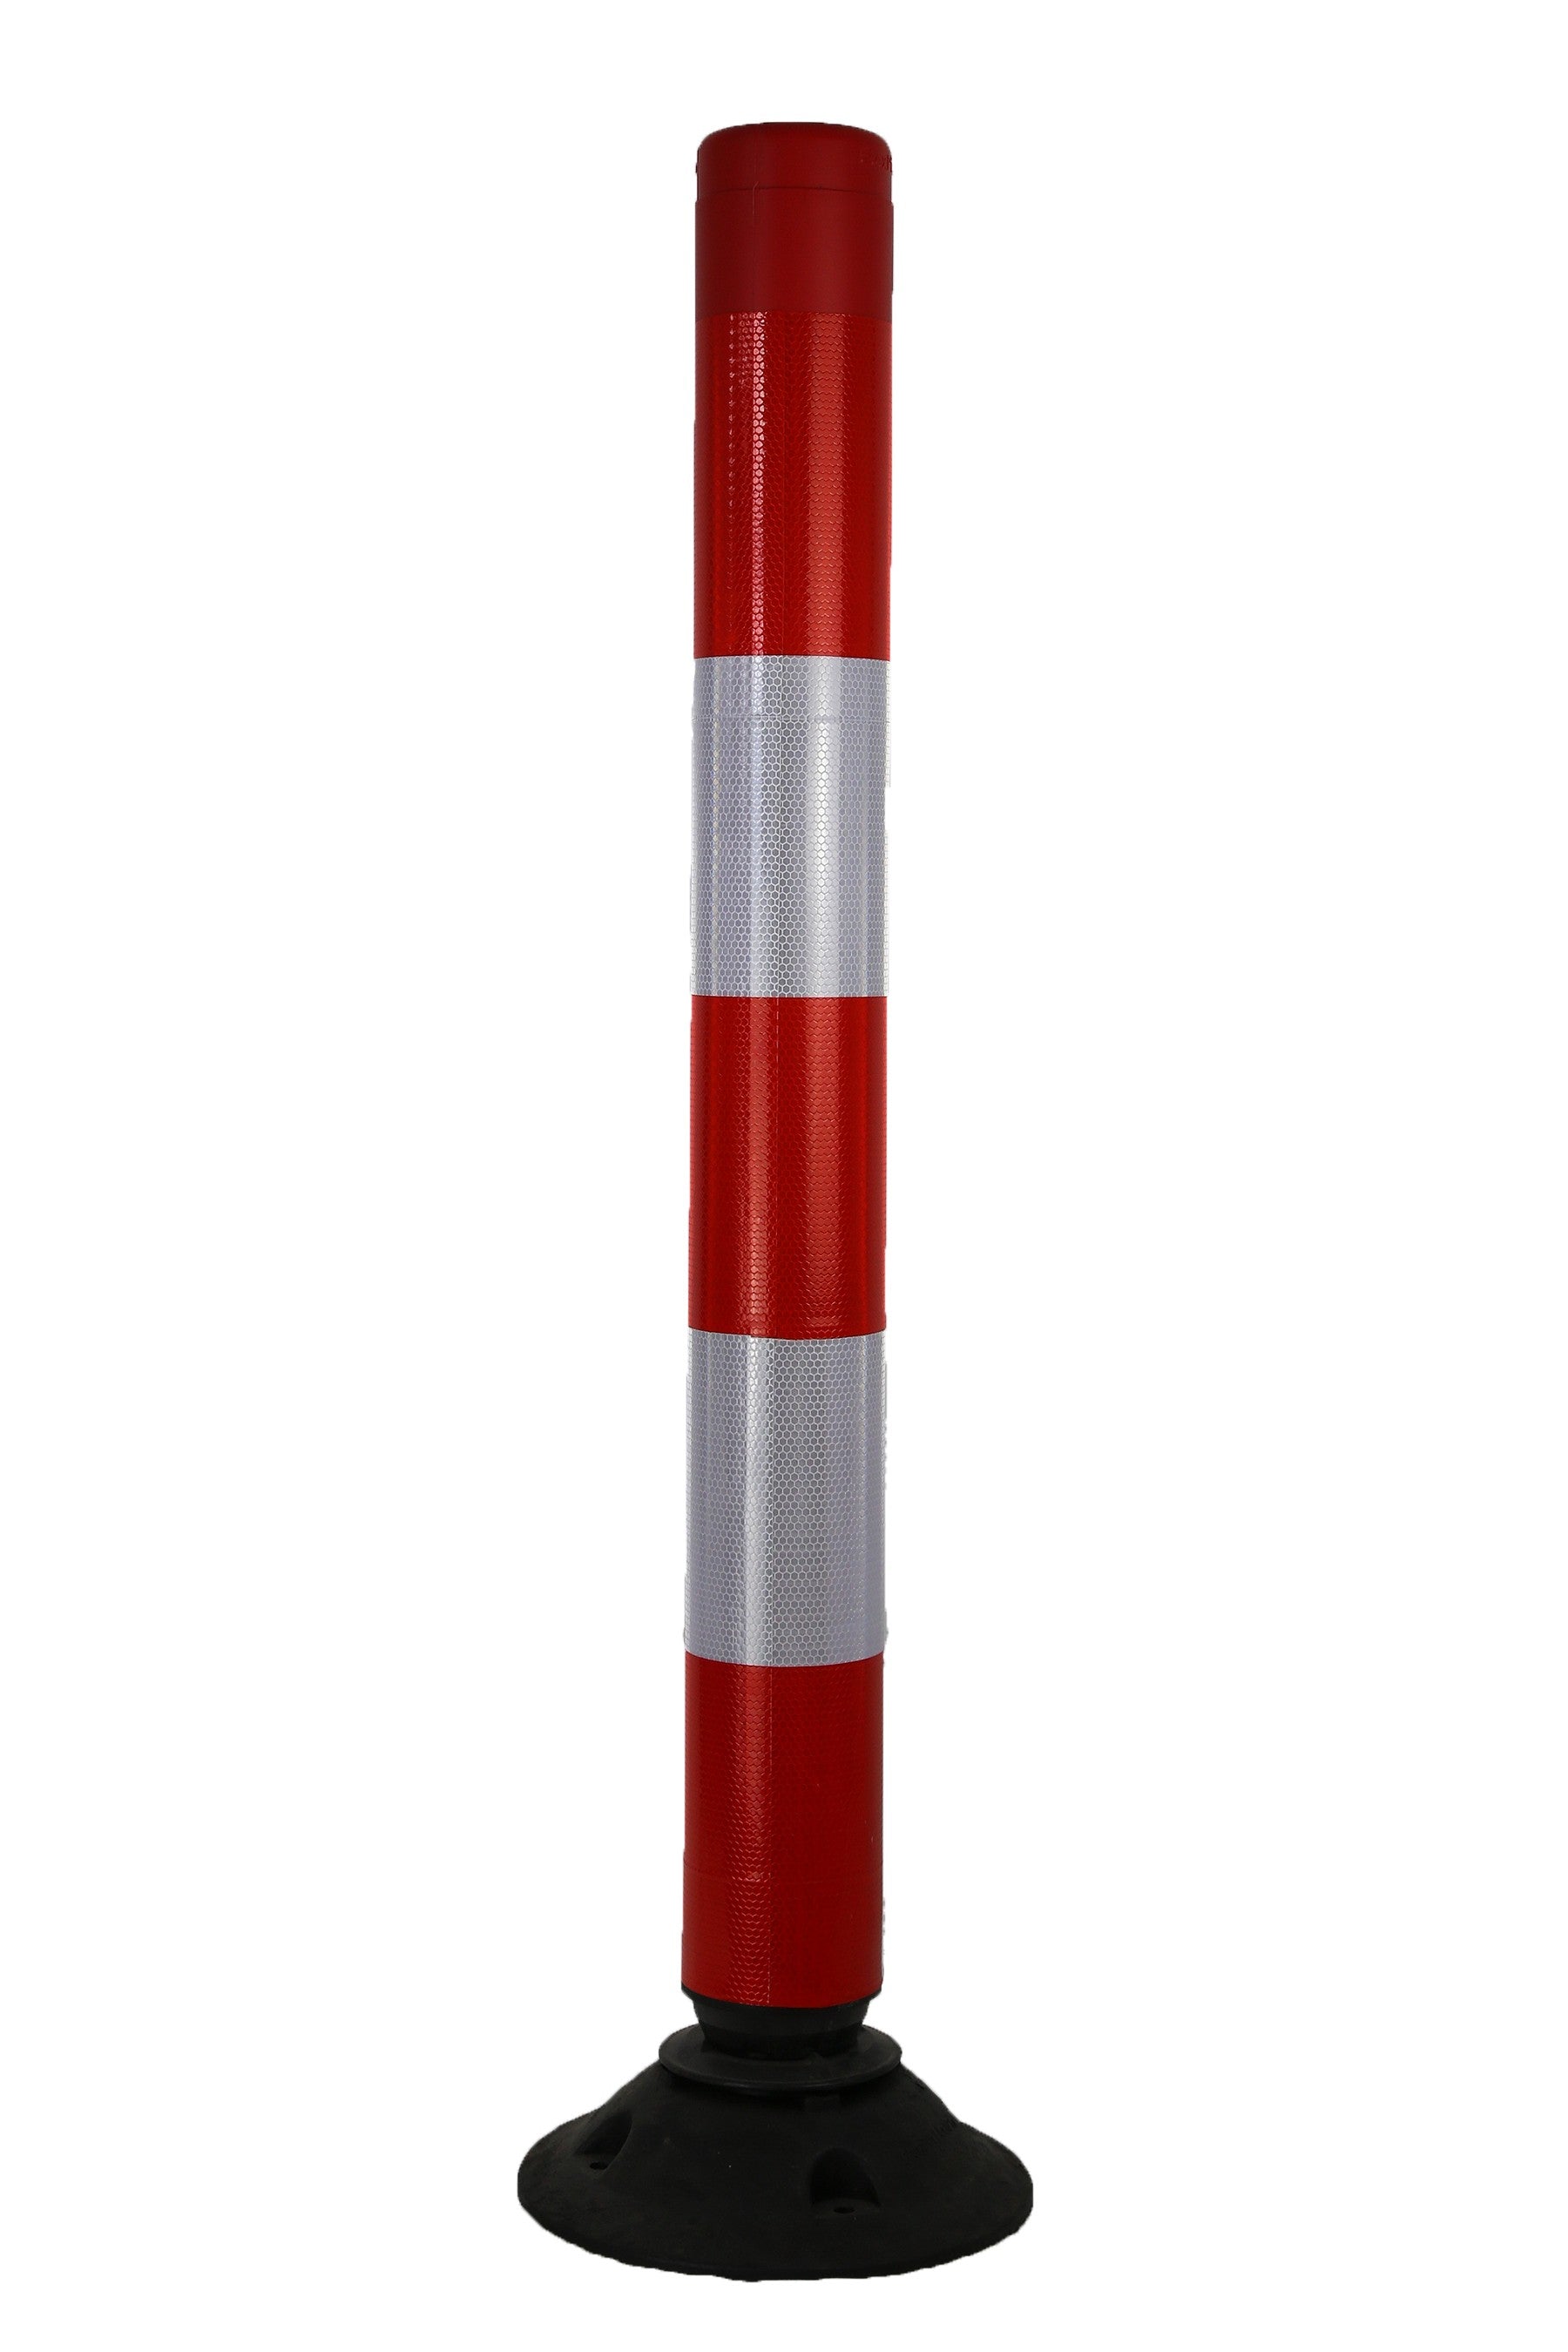 FlexPin Reflective Flexible Post (Red/White) - 1000mm